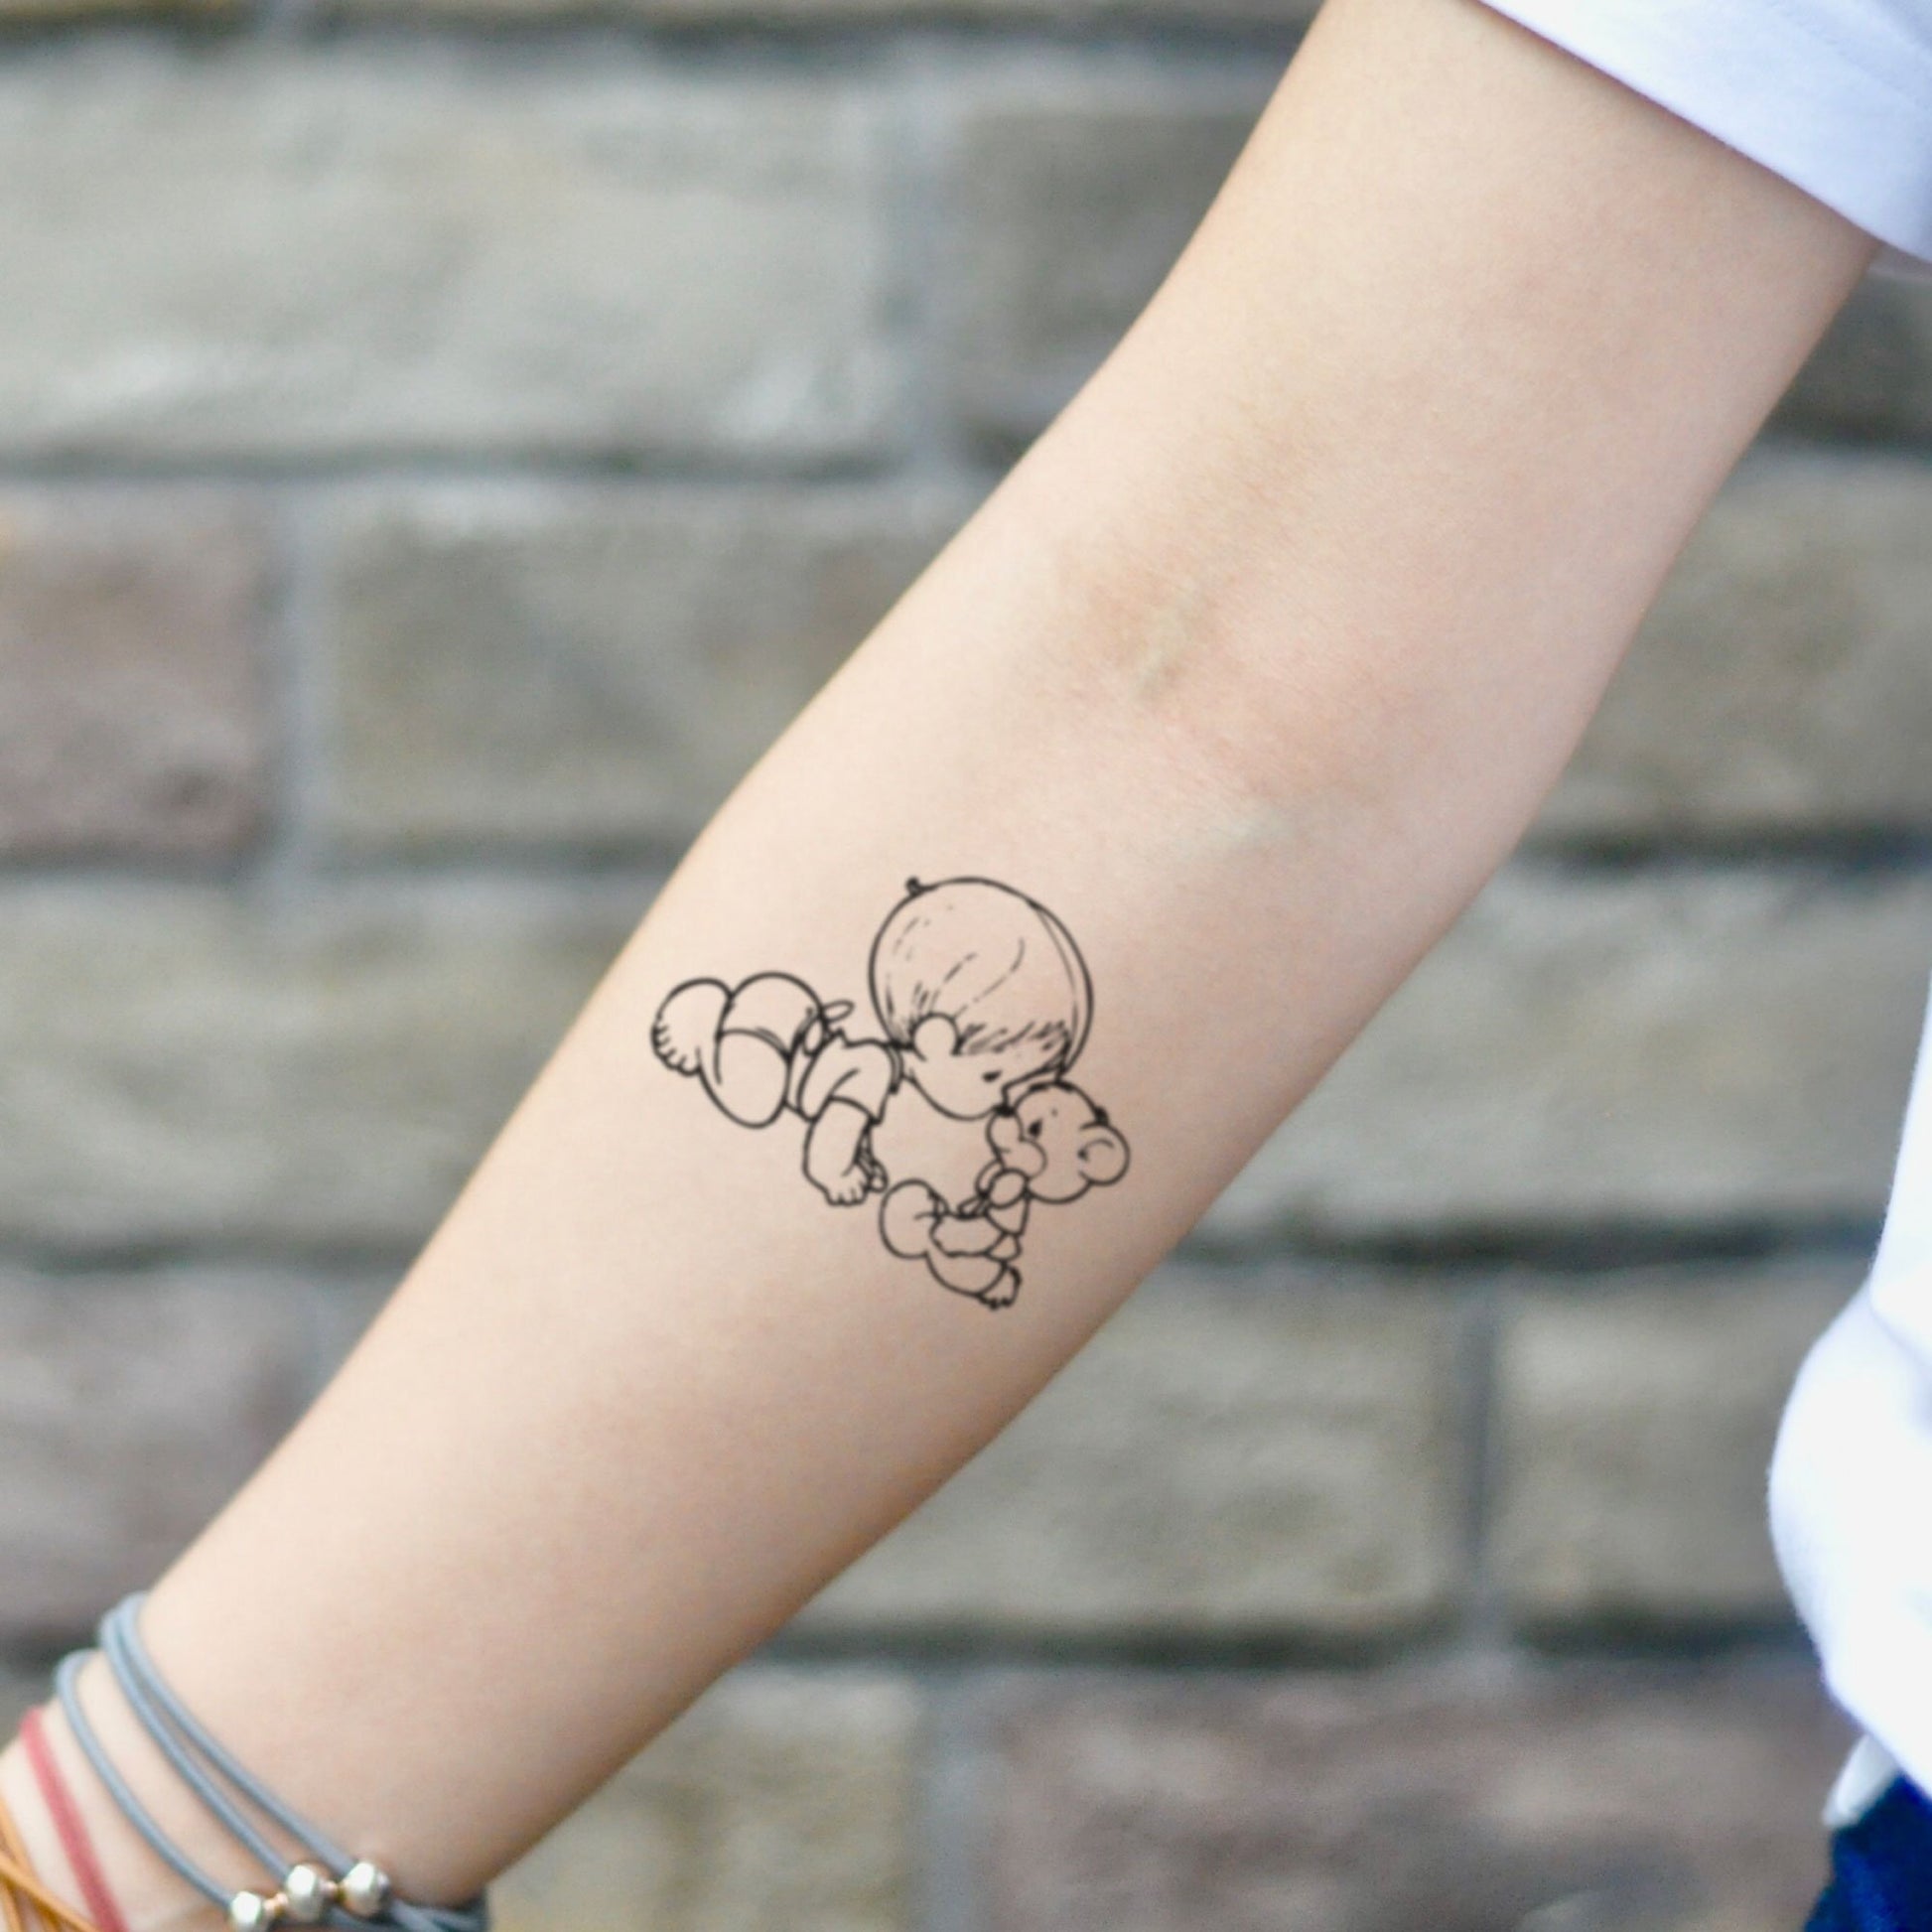 fake small precious moments illustrative temporary tattoo sticker design idea on inner arm